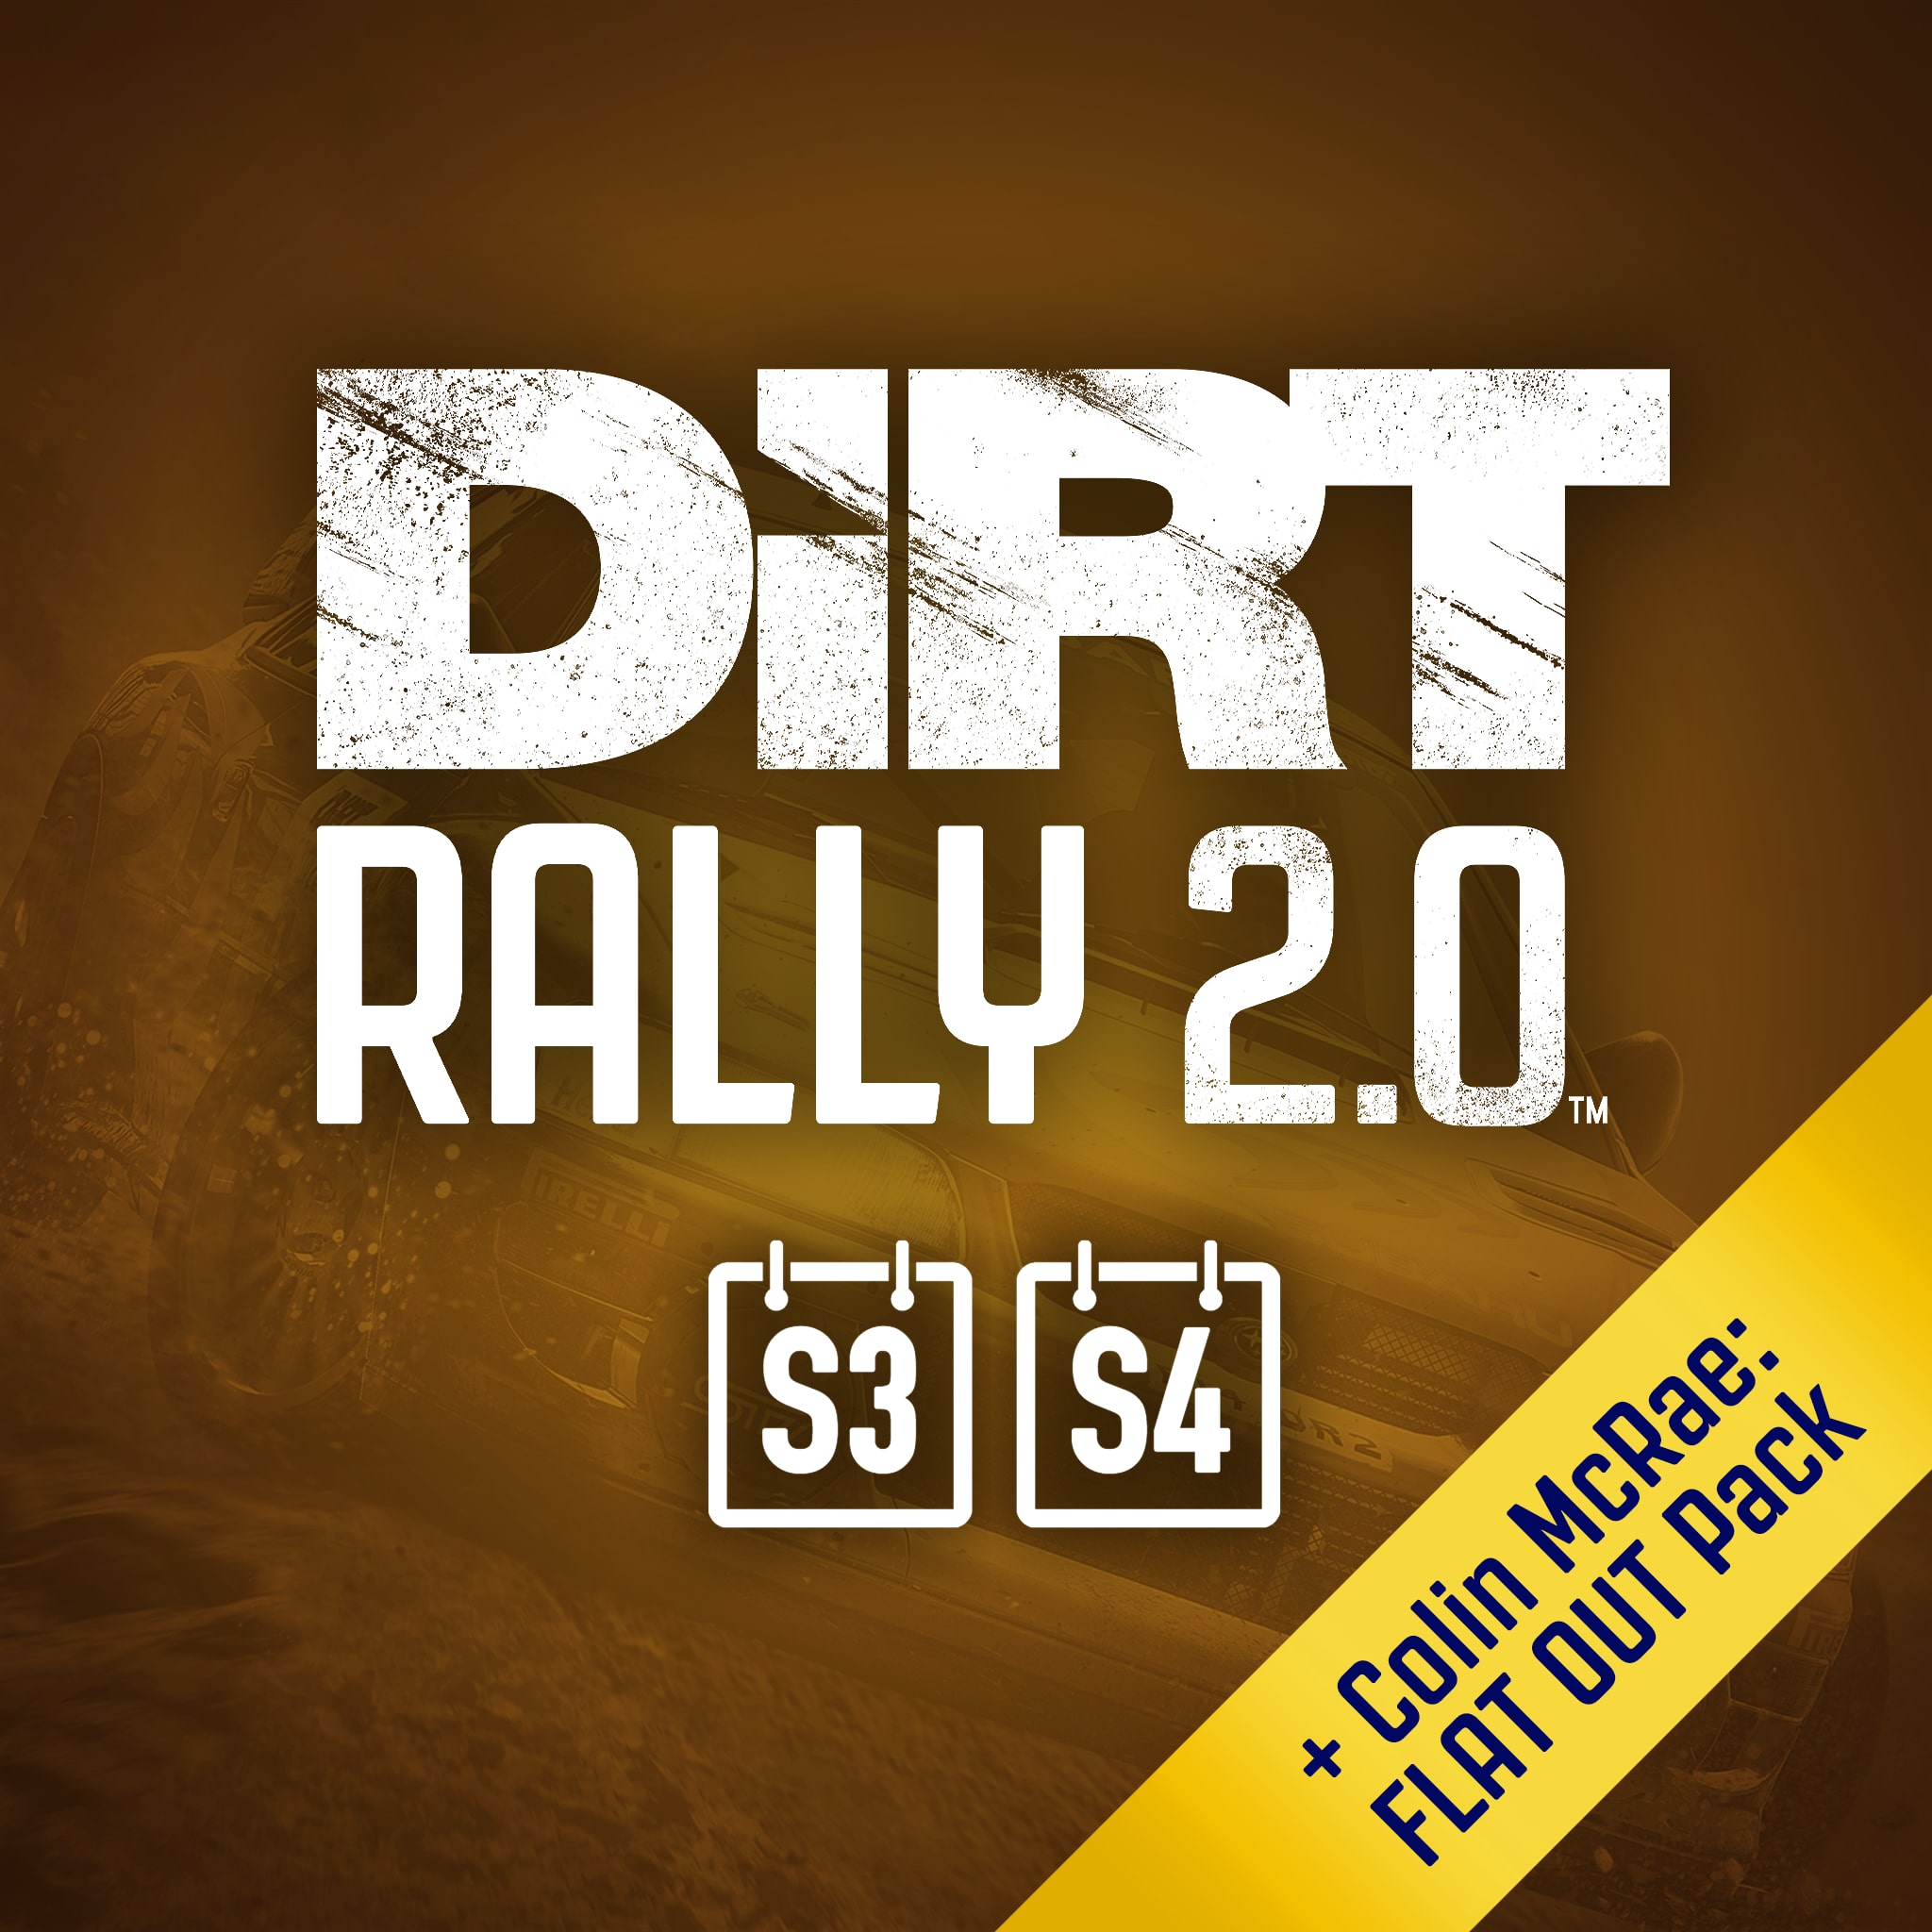 DiRT Rally Deluxe Content (Seasons 3 4)